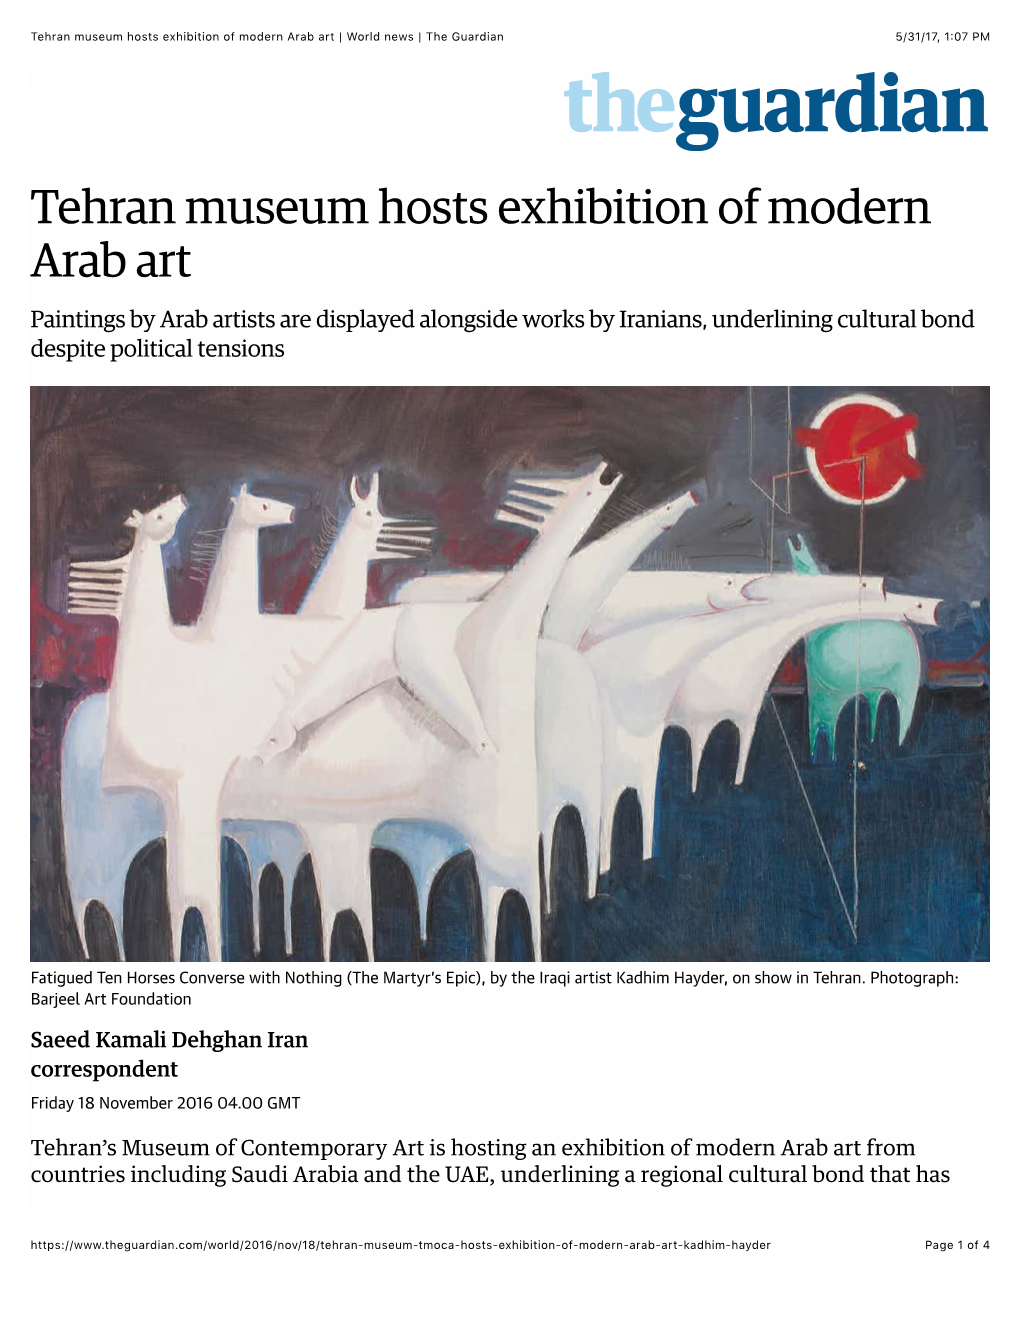 Tehran Museum Hosts Exhibition of Modern Arab Art | World News | the Guardian 5/31/17, 1:07 PM